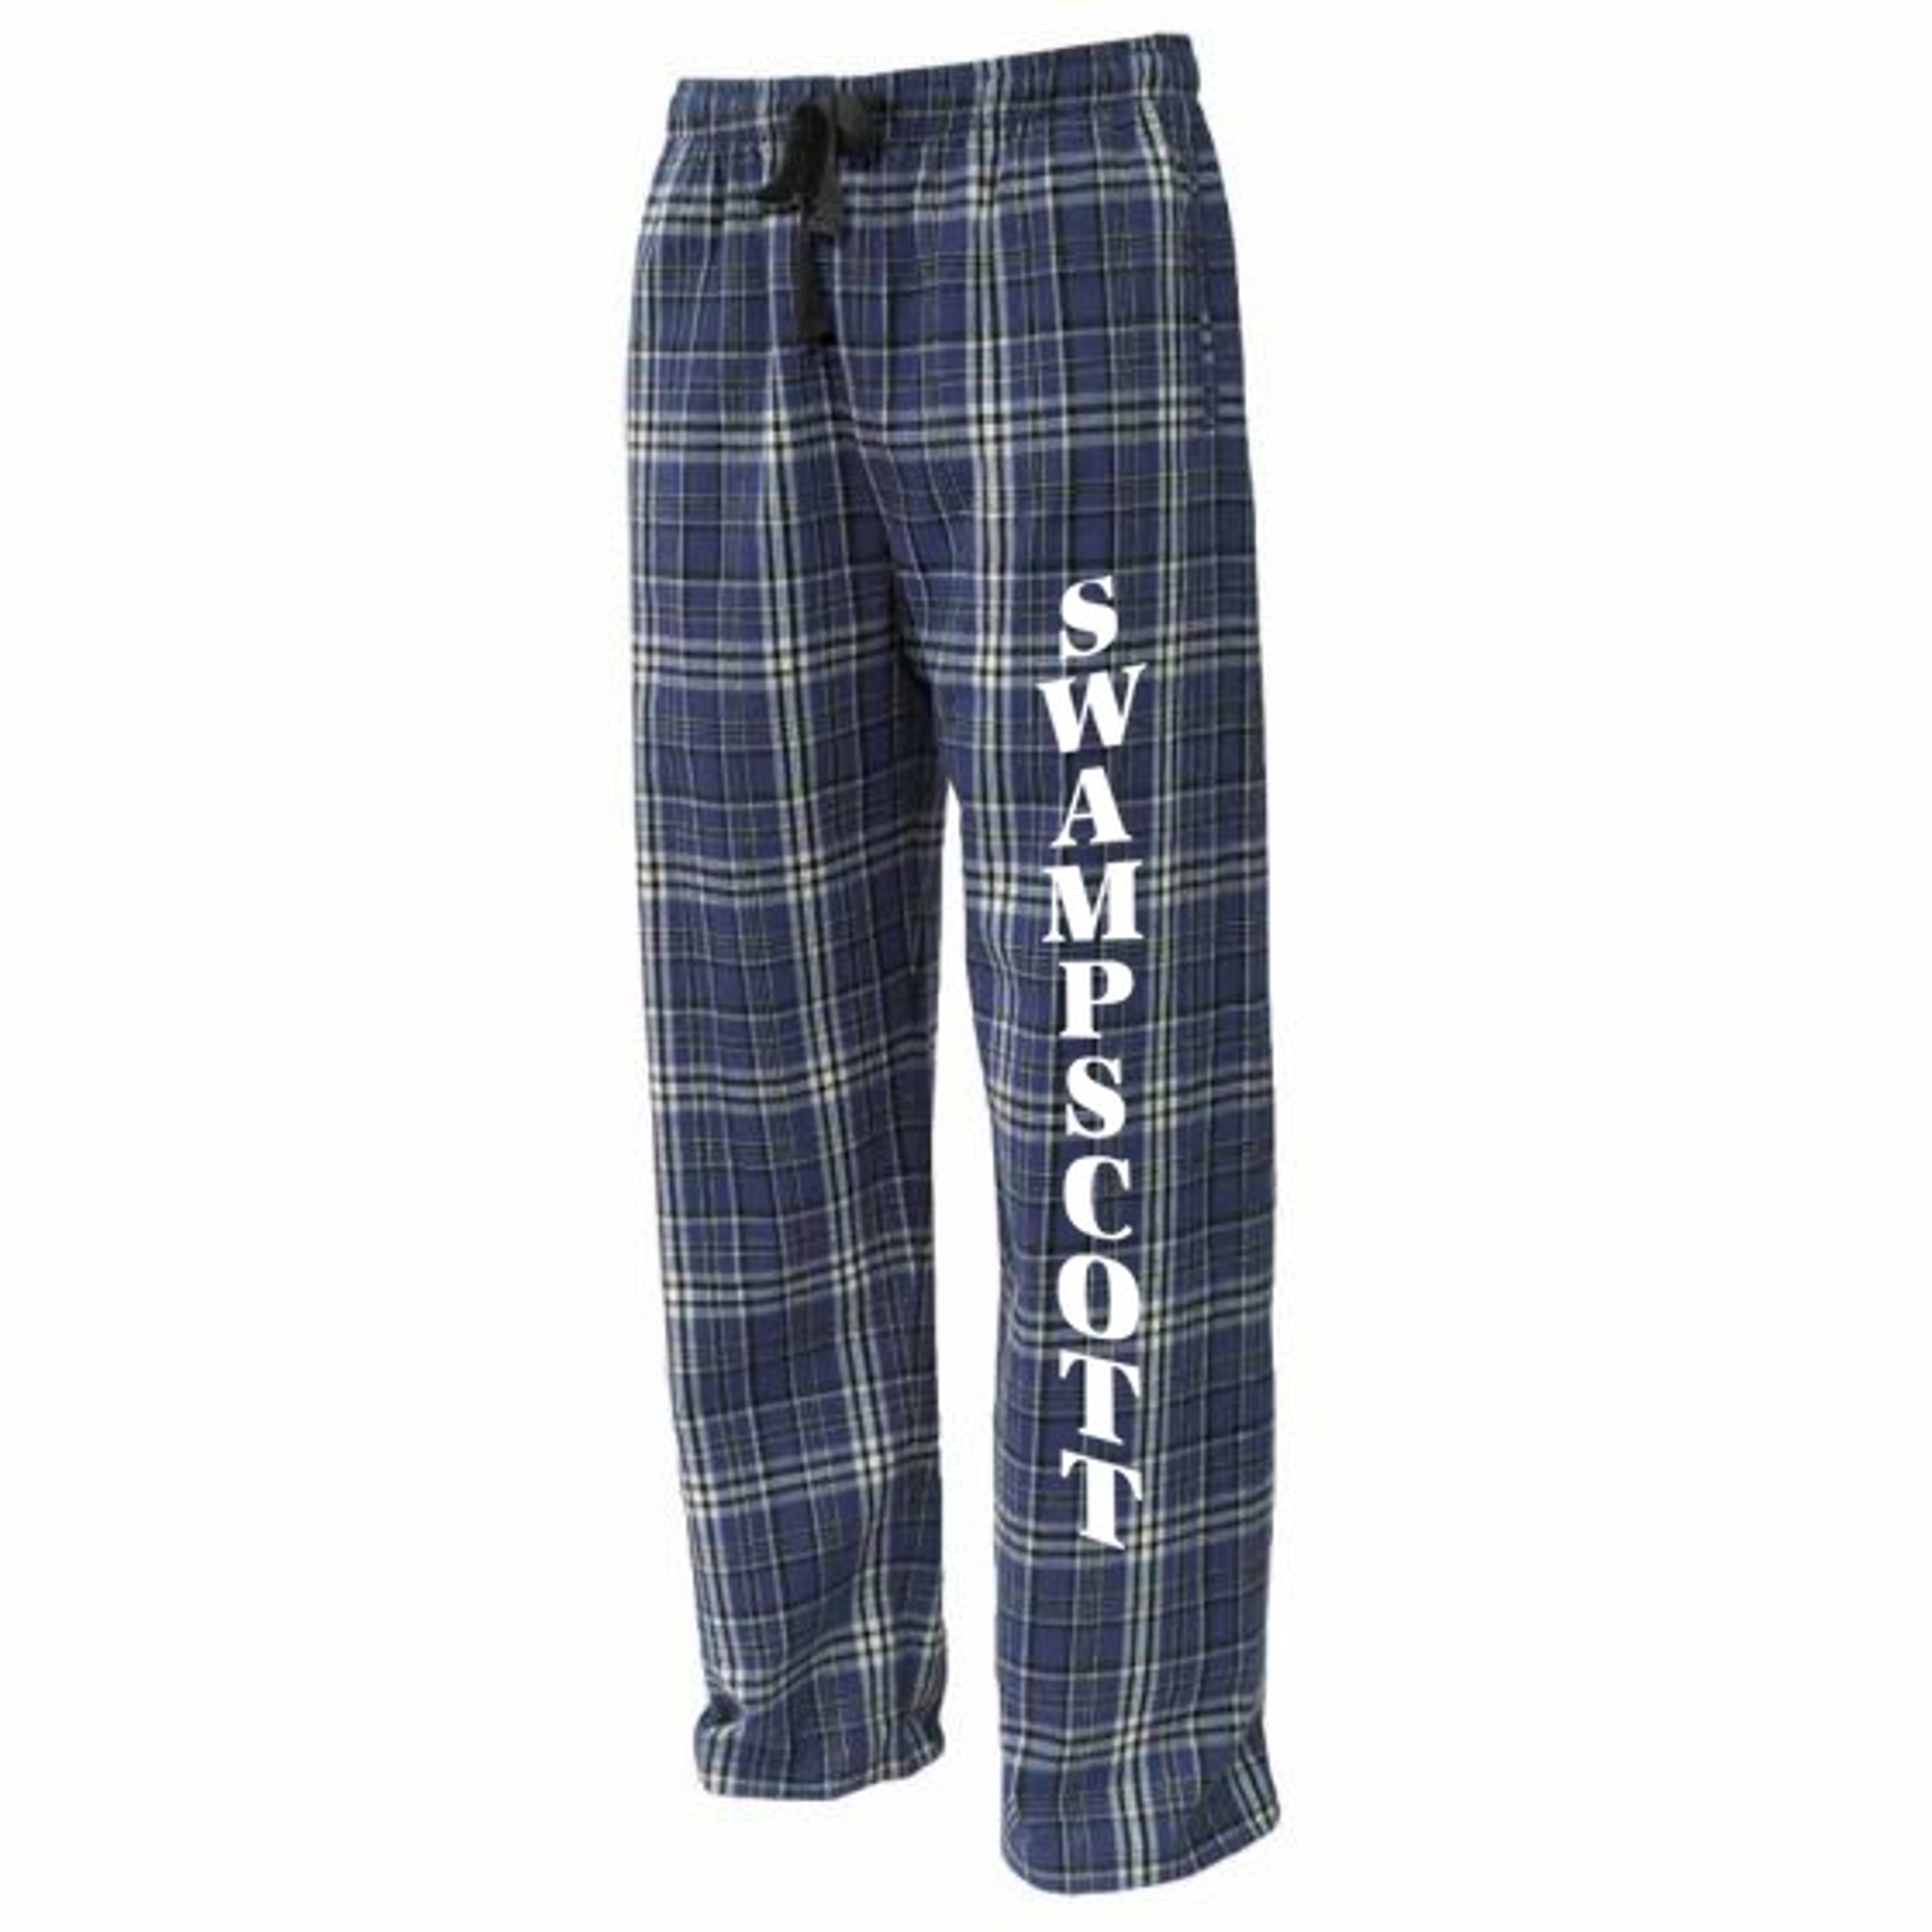 Swampscott Flannel Pajamas